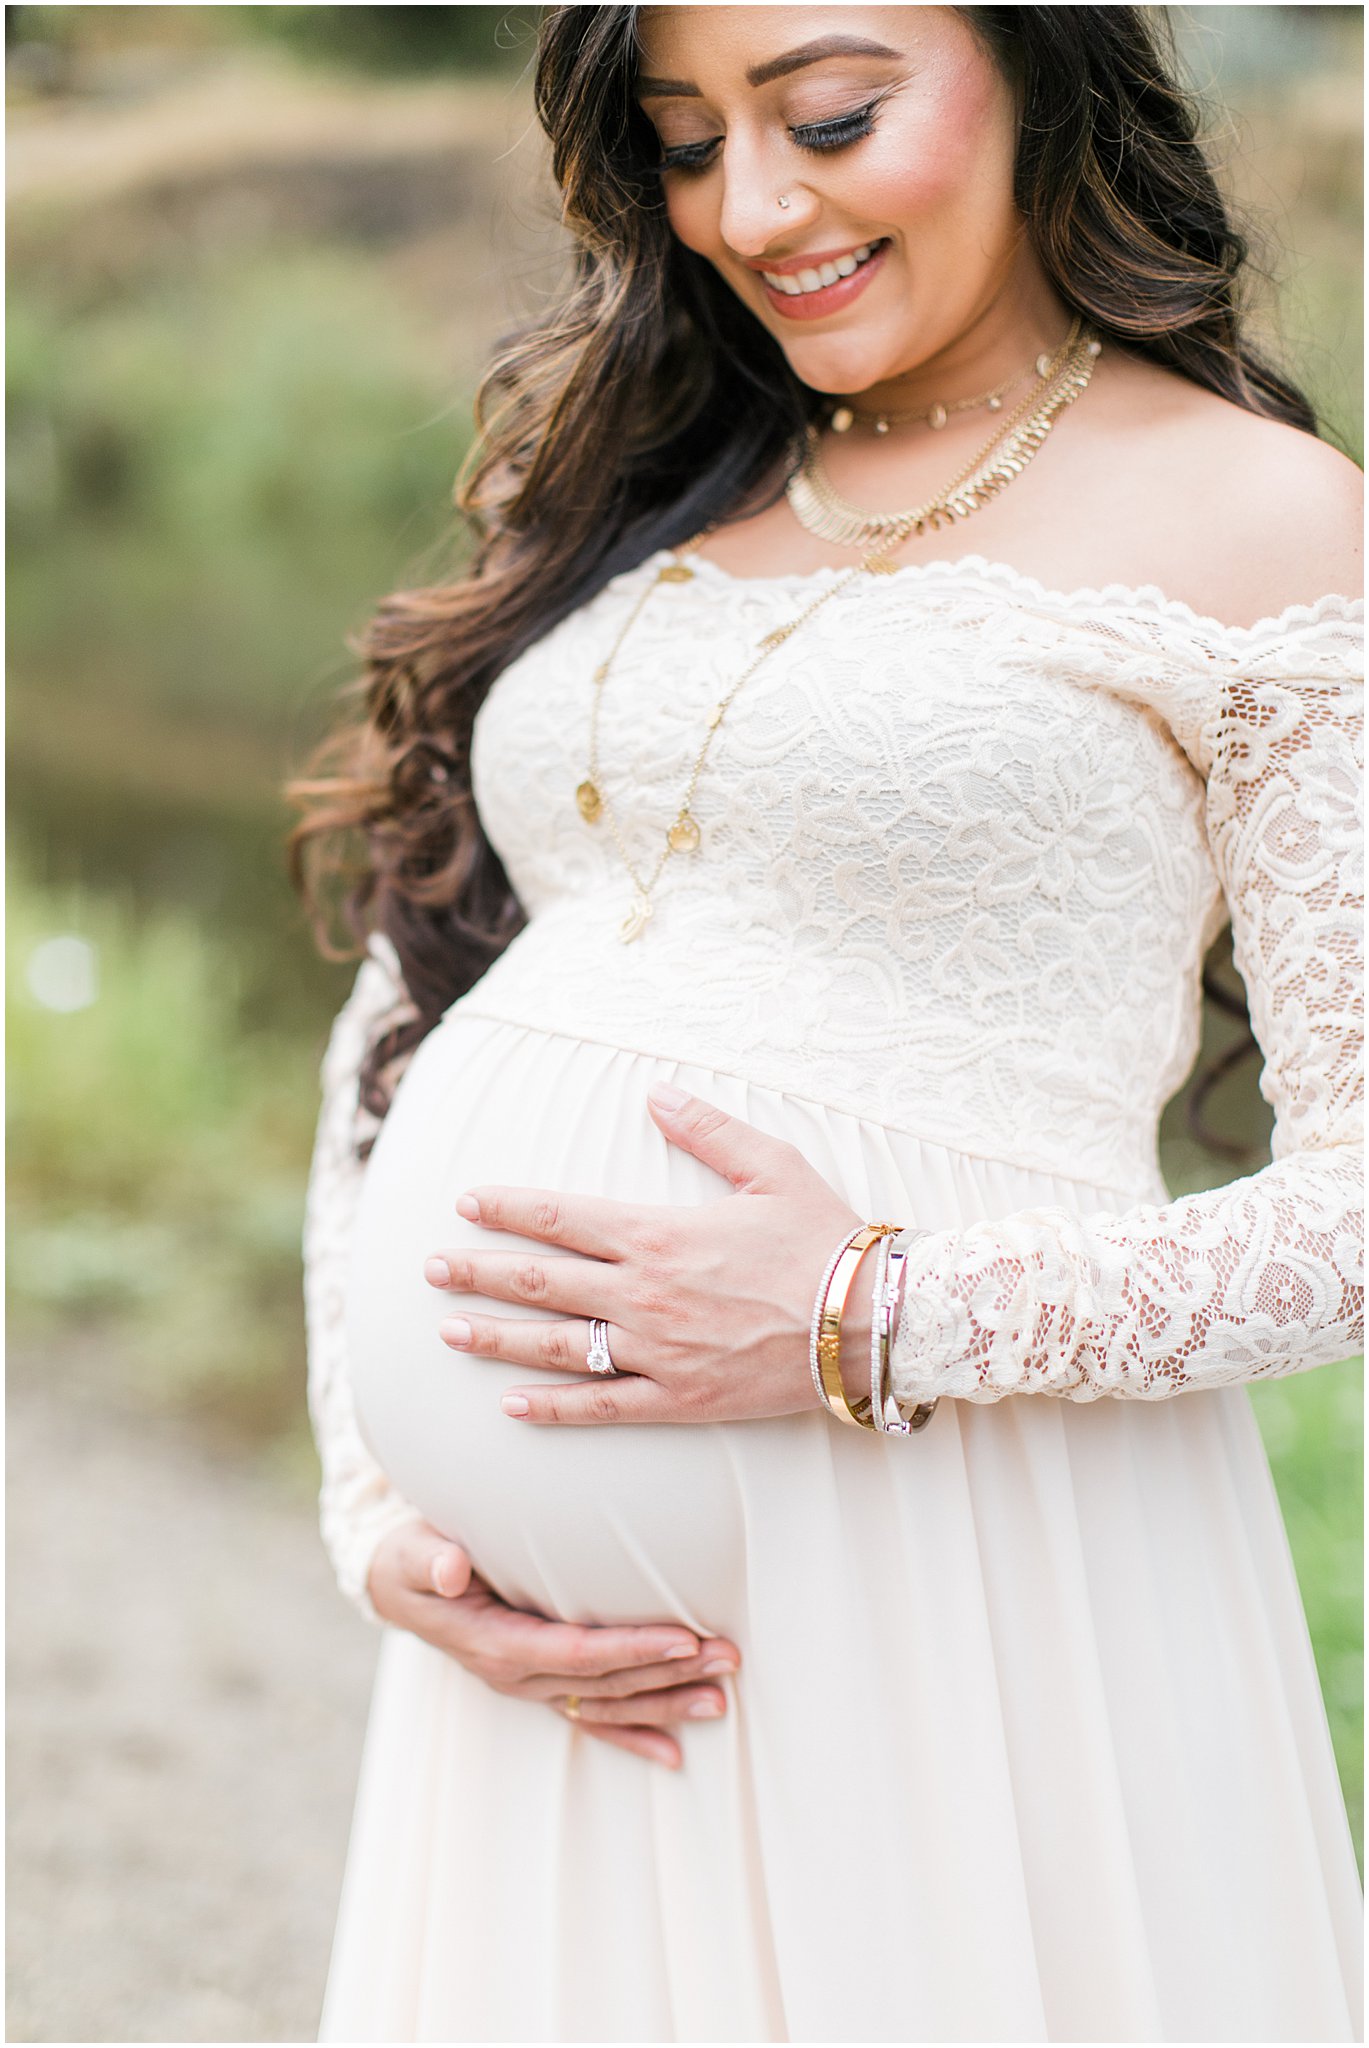 Gilroy Maternity Photos - Bay Area Photographer - Angela Sue Photography_0009.jpg